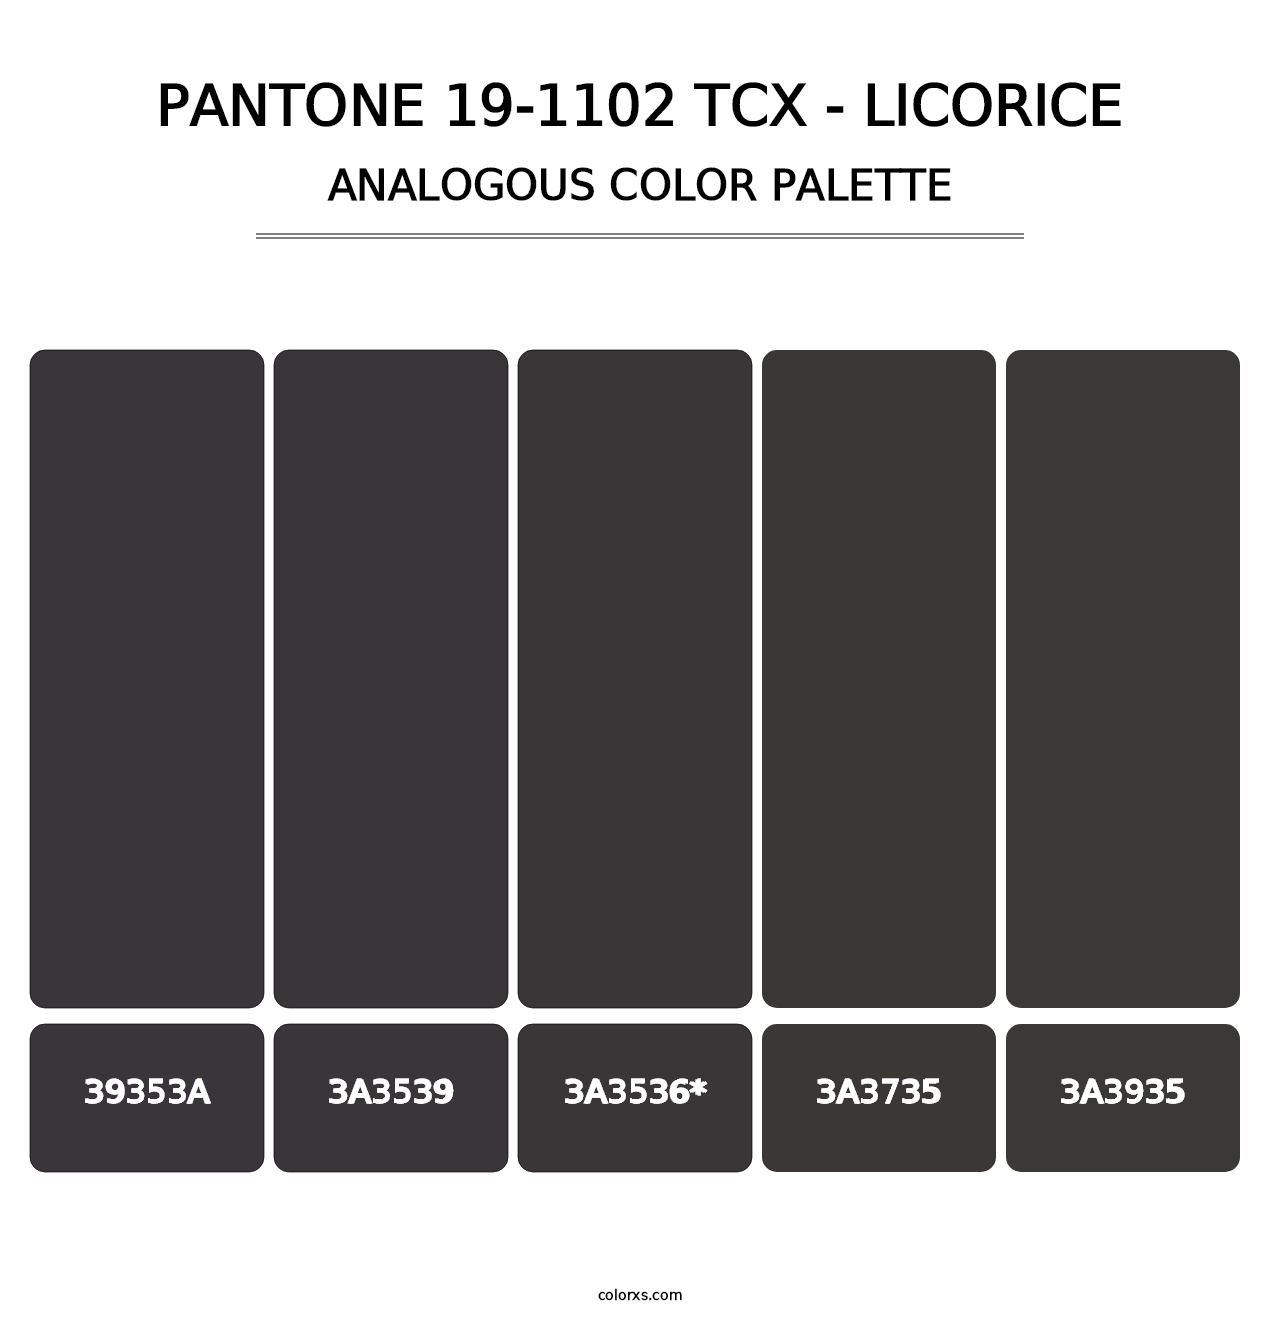 PANTONE 19-1102 TCX - Licorice - Analogous Color Palette